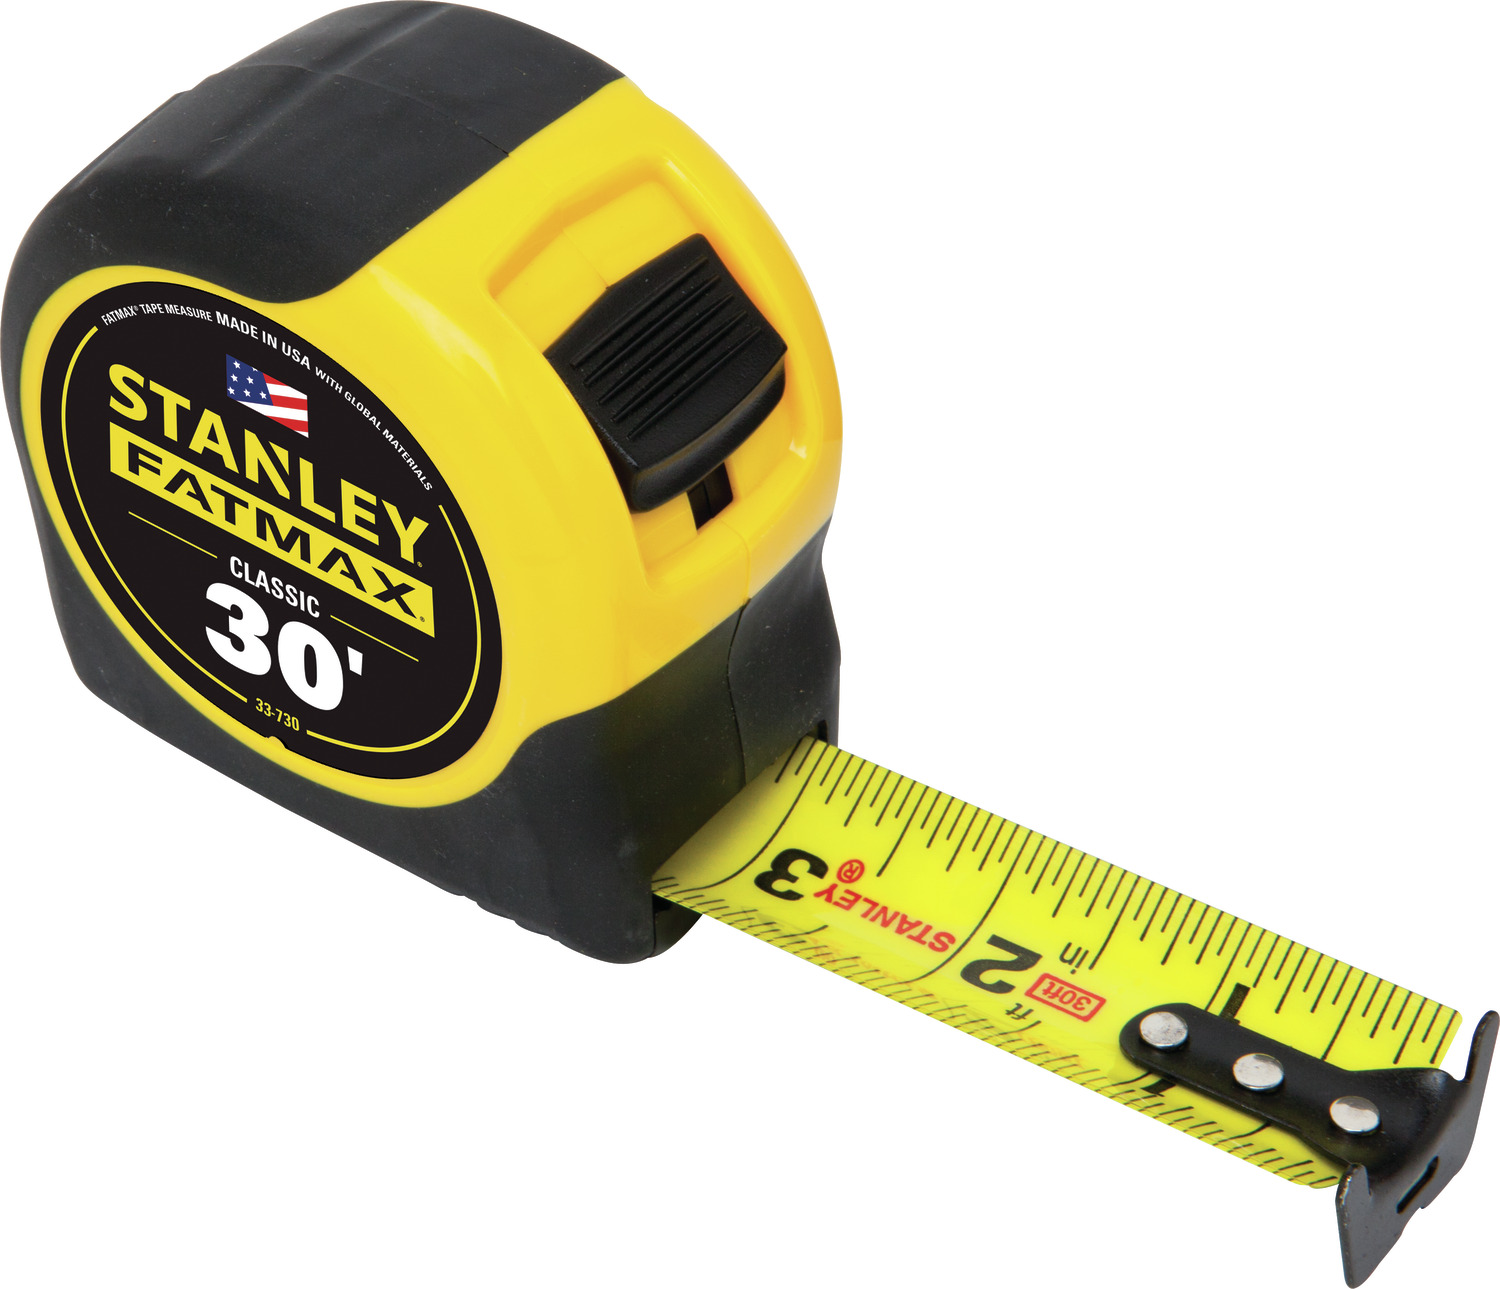 Stanley 30 FT Fatmax® Classic Tape Measure